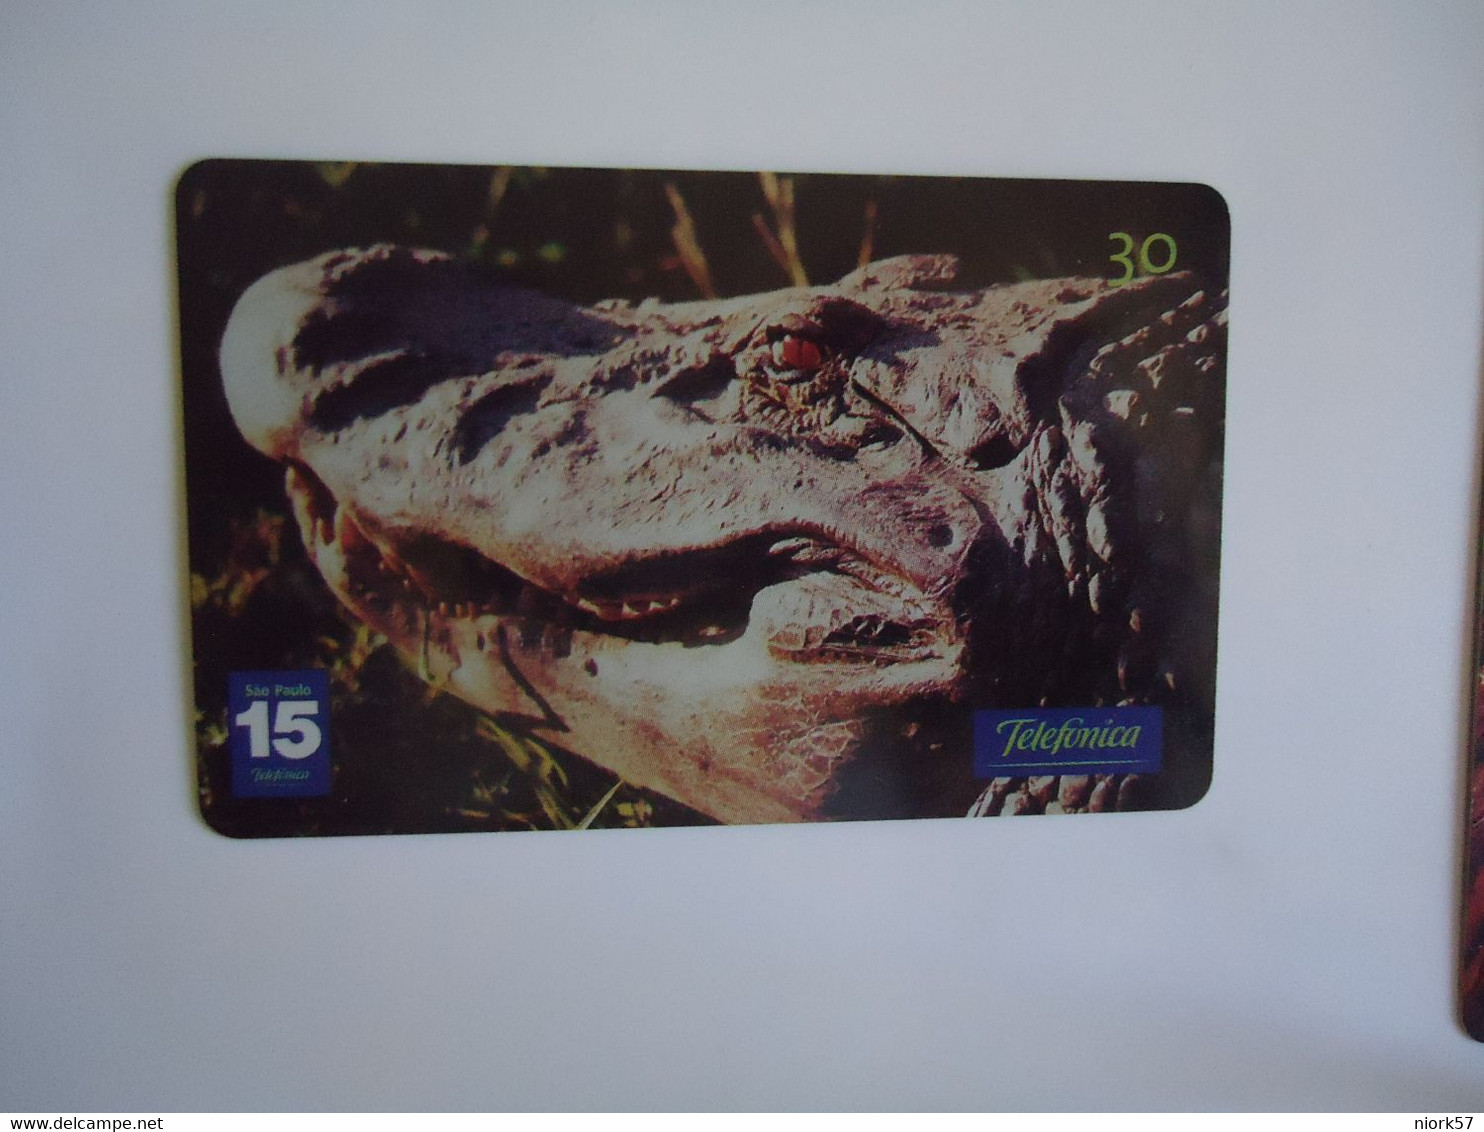 BRAZIL USED CARDS ANIMALS CROCODILES - Krokodillen En Alligators